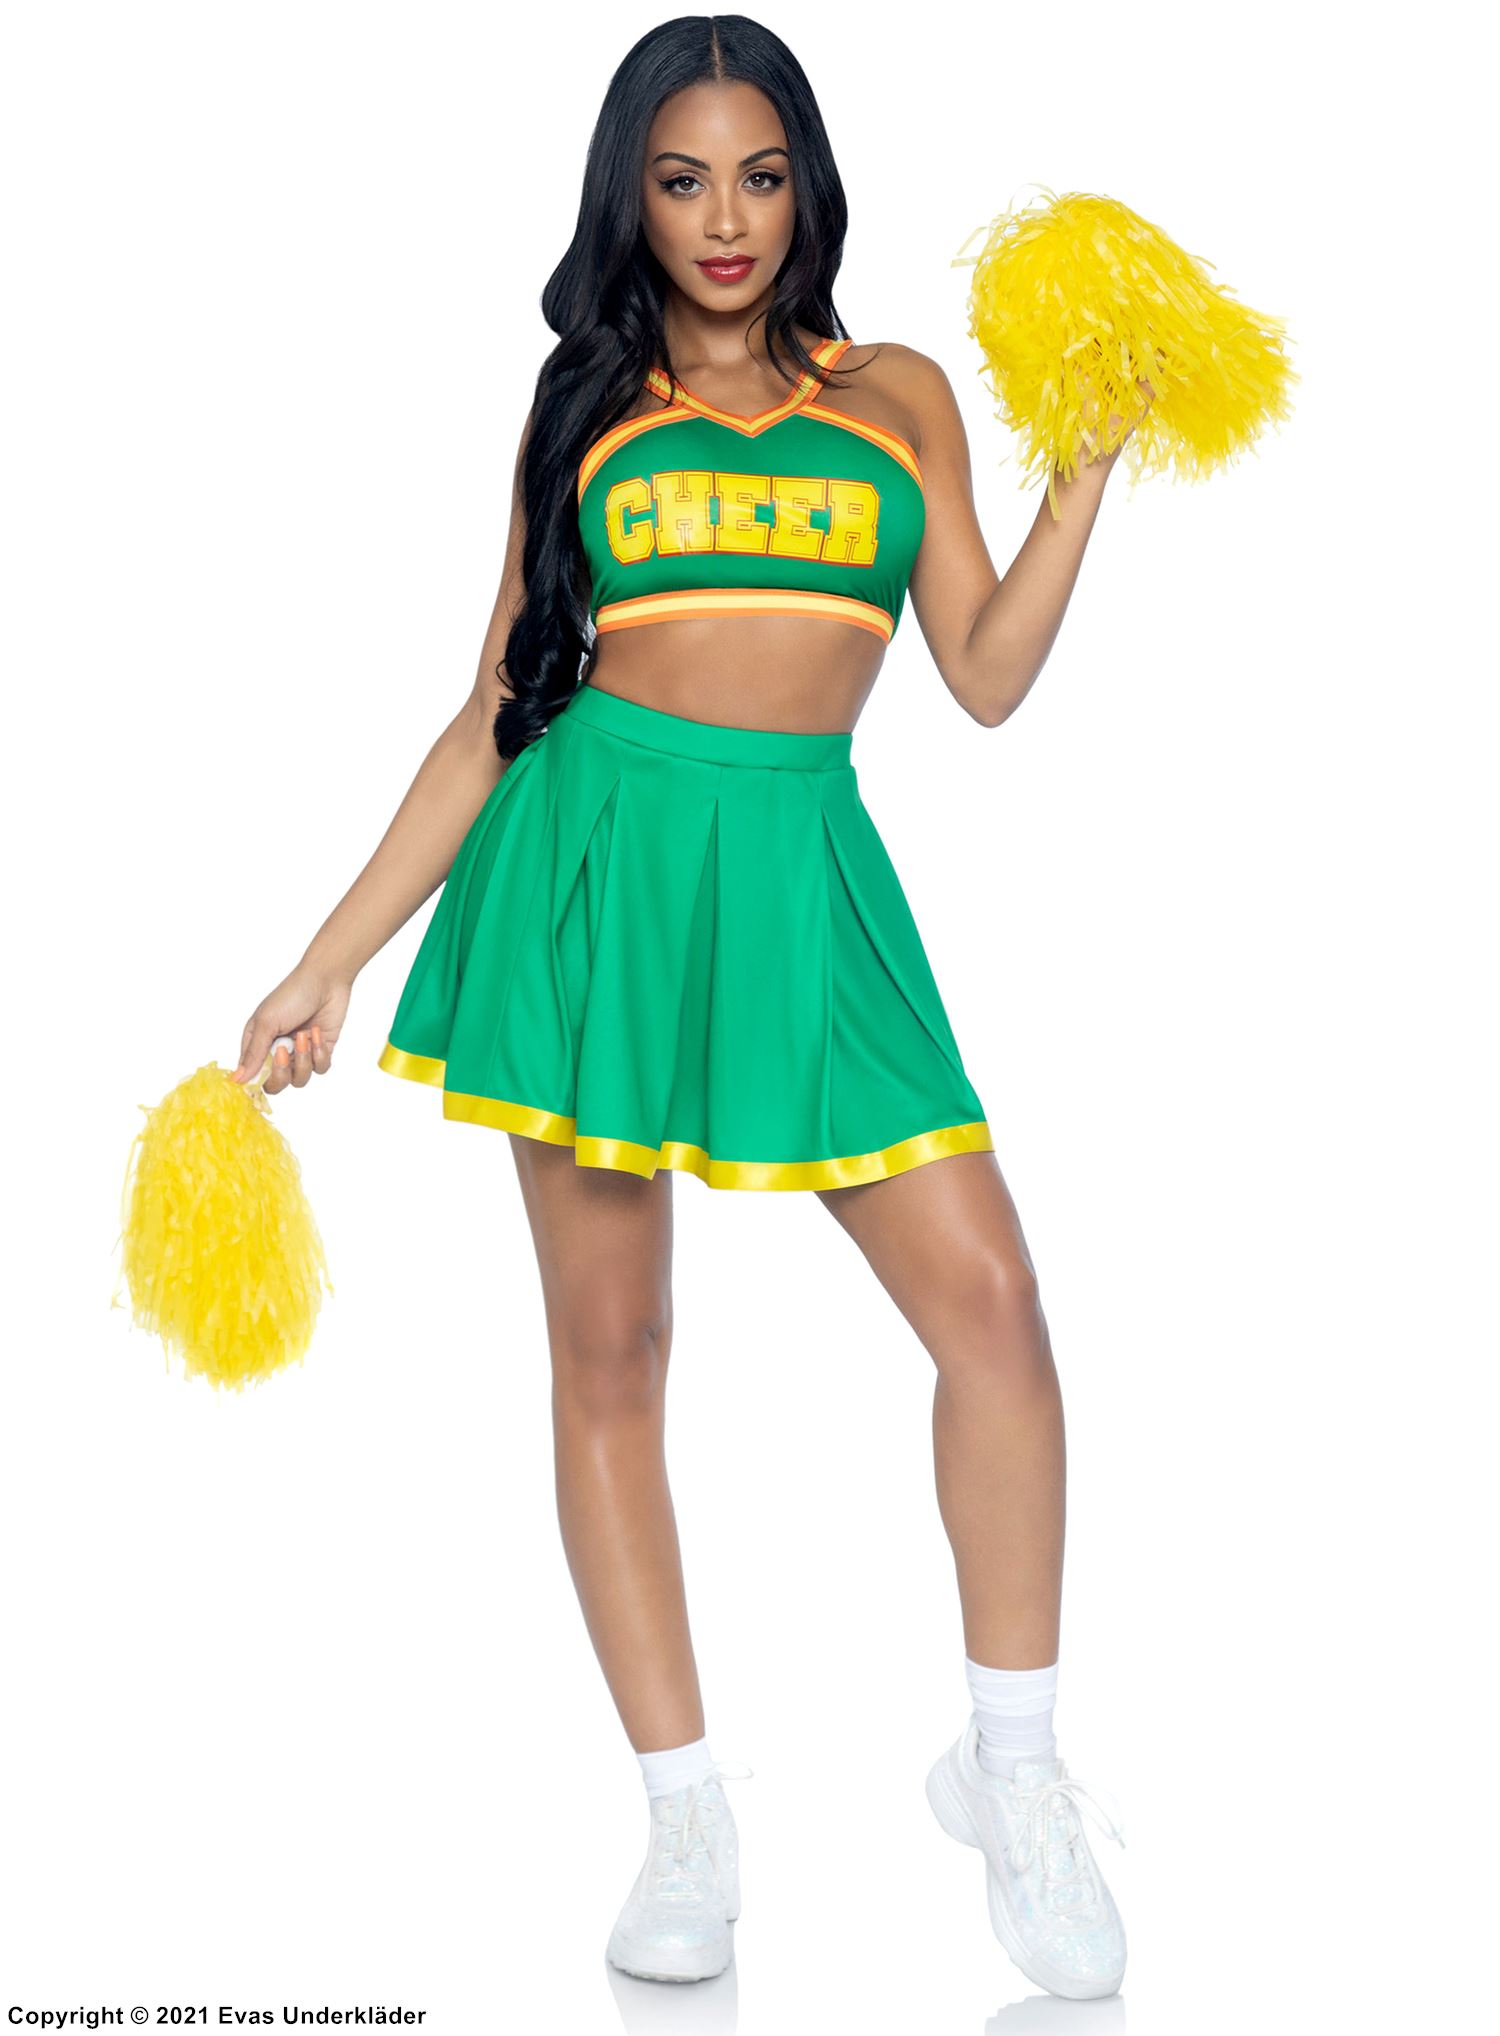 Cheerleader, top and skirt costume, pleats, pom pom, stripes